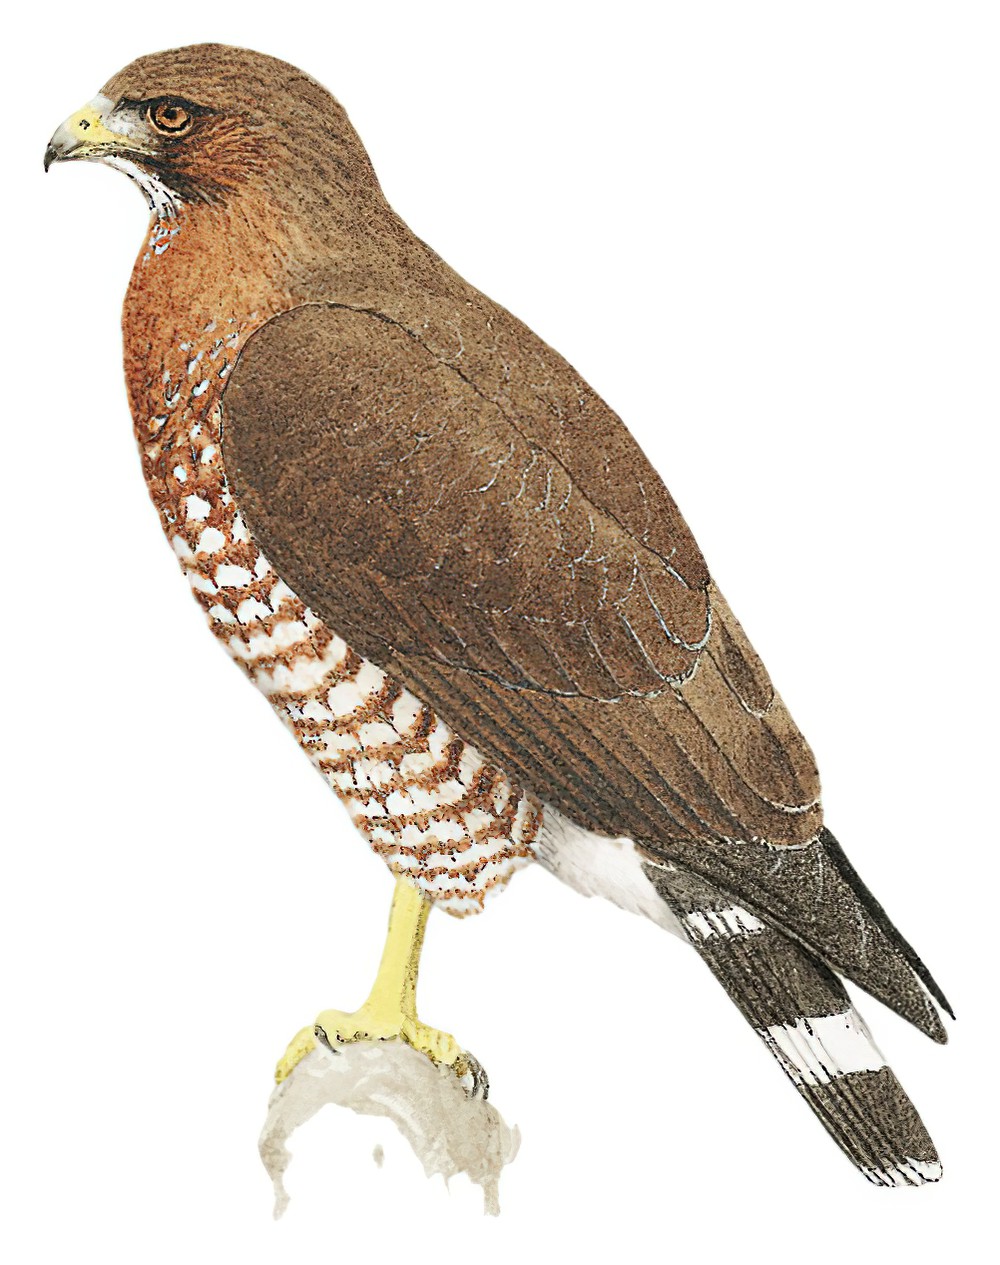 Broad-winged Hawk / Buteo platypterus